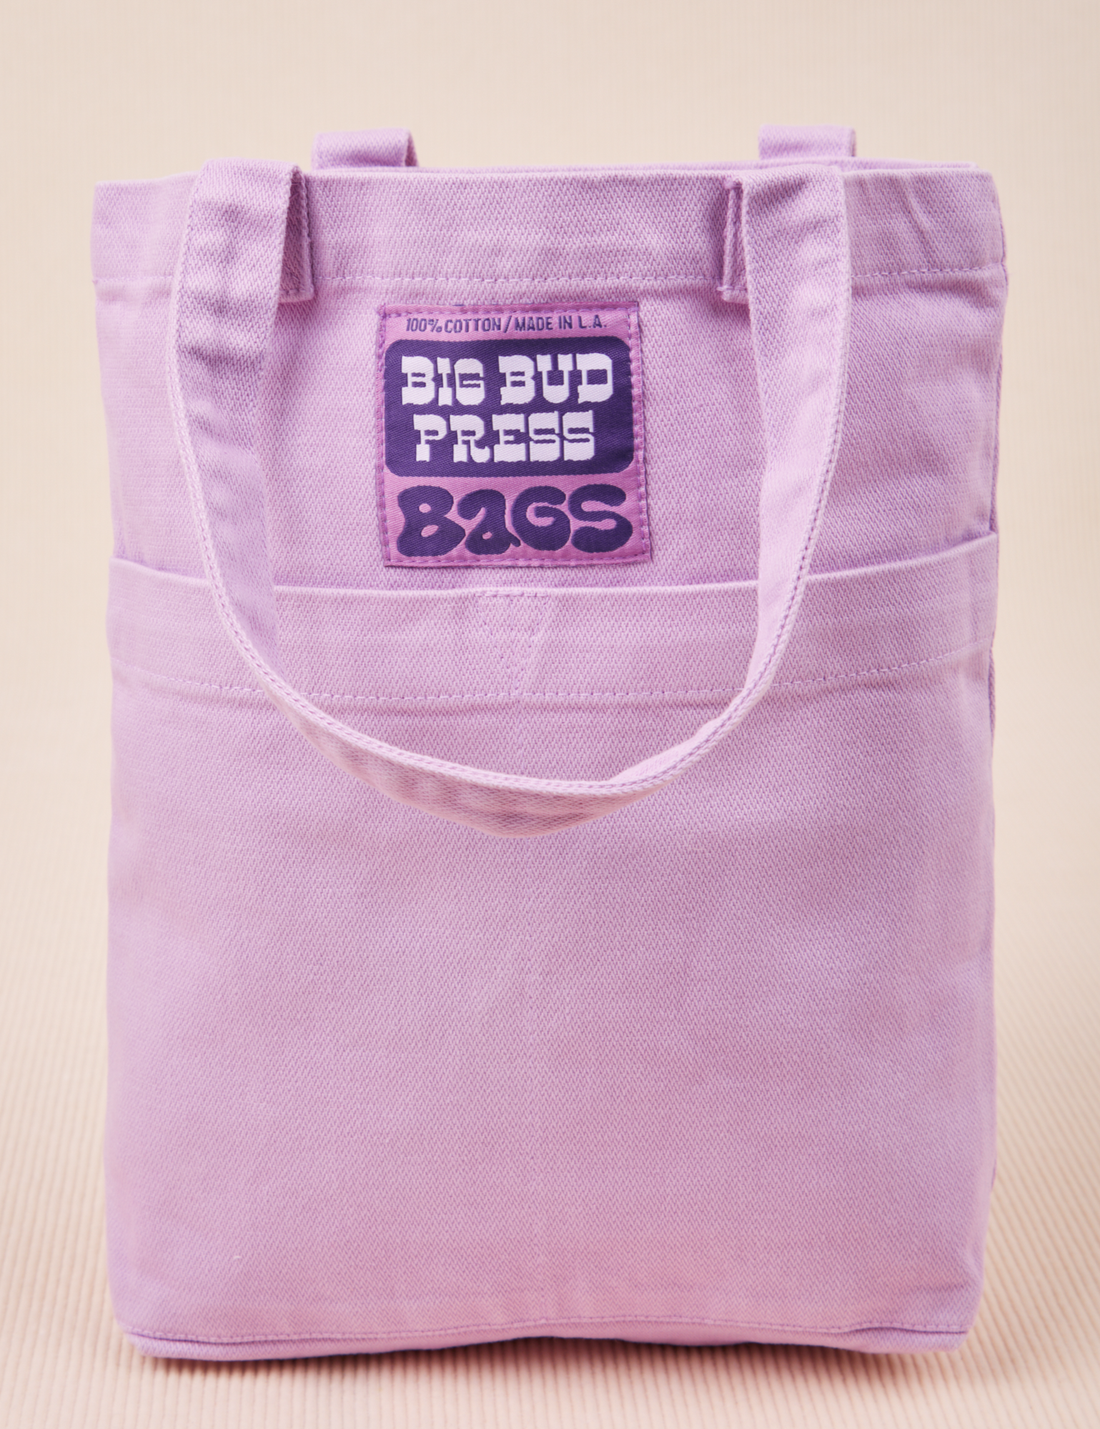 Mini Tote Bags in Lilac Purple